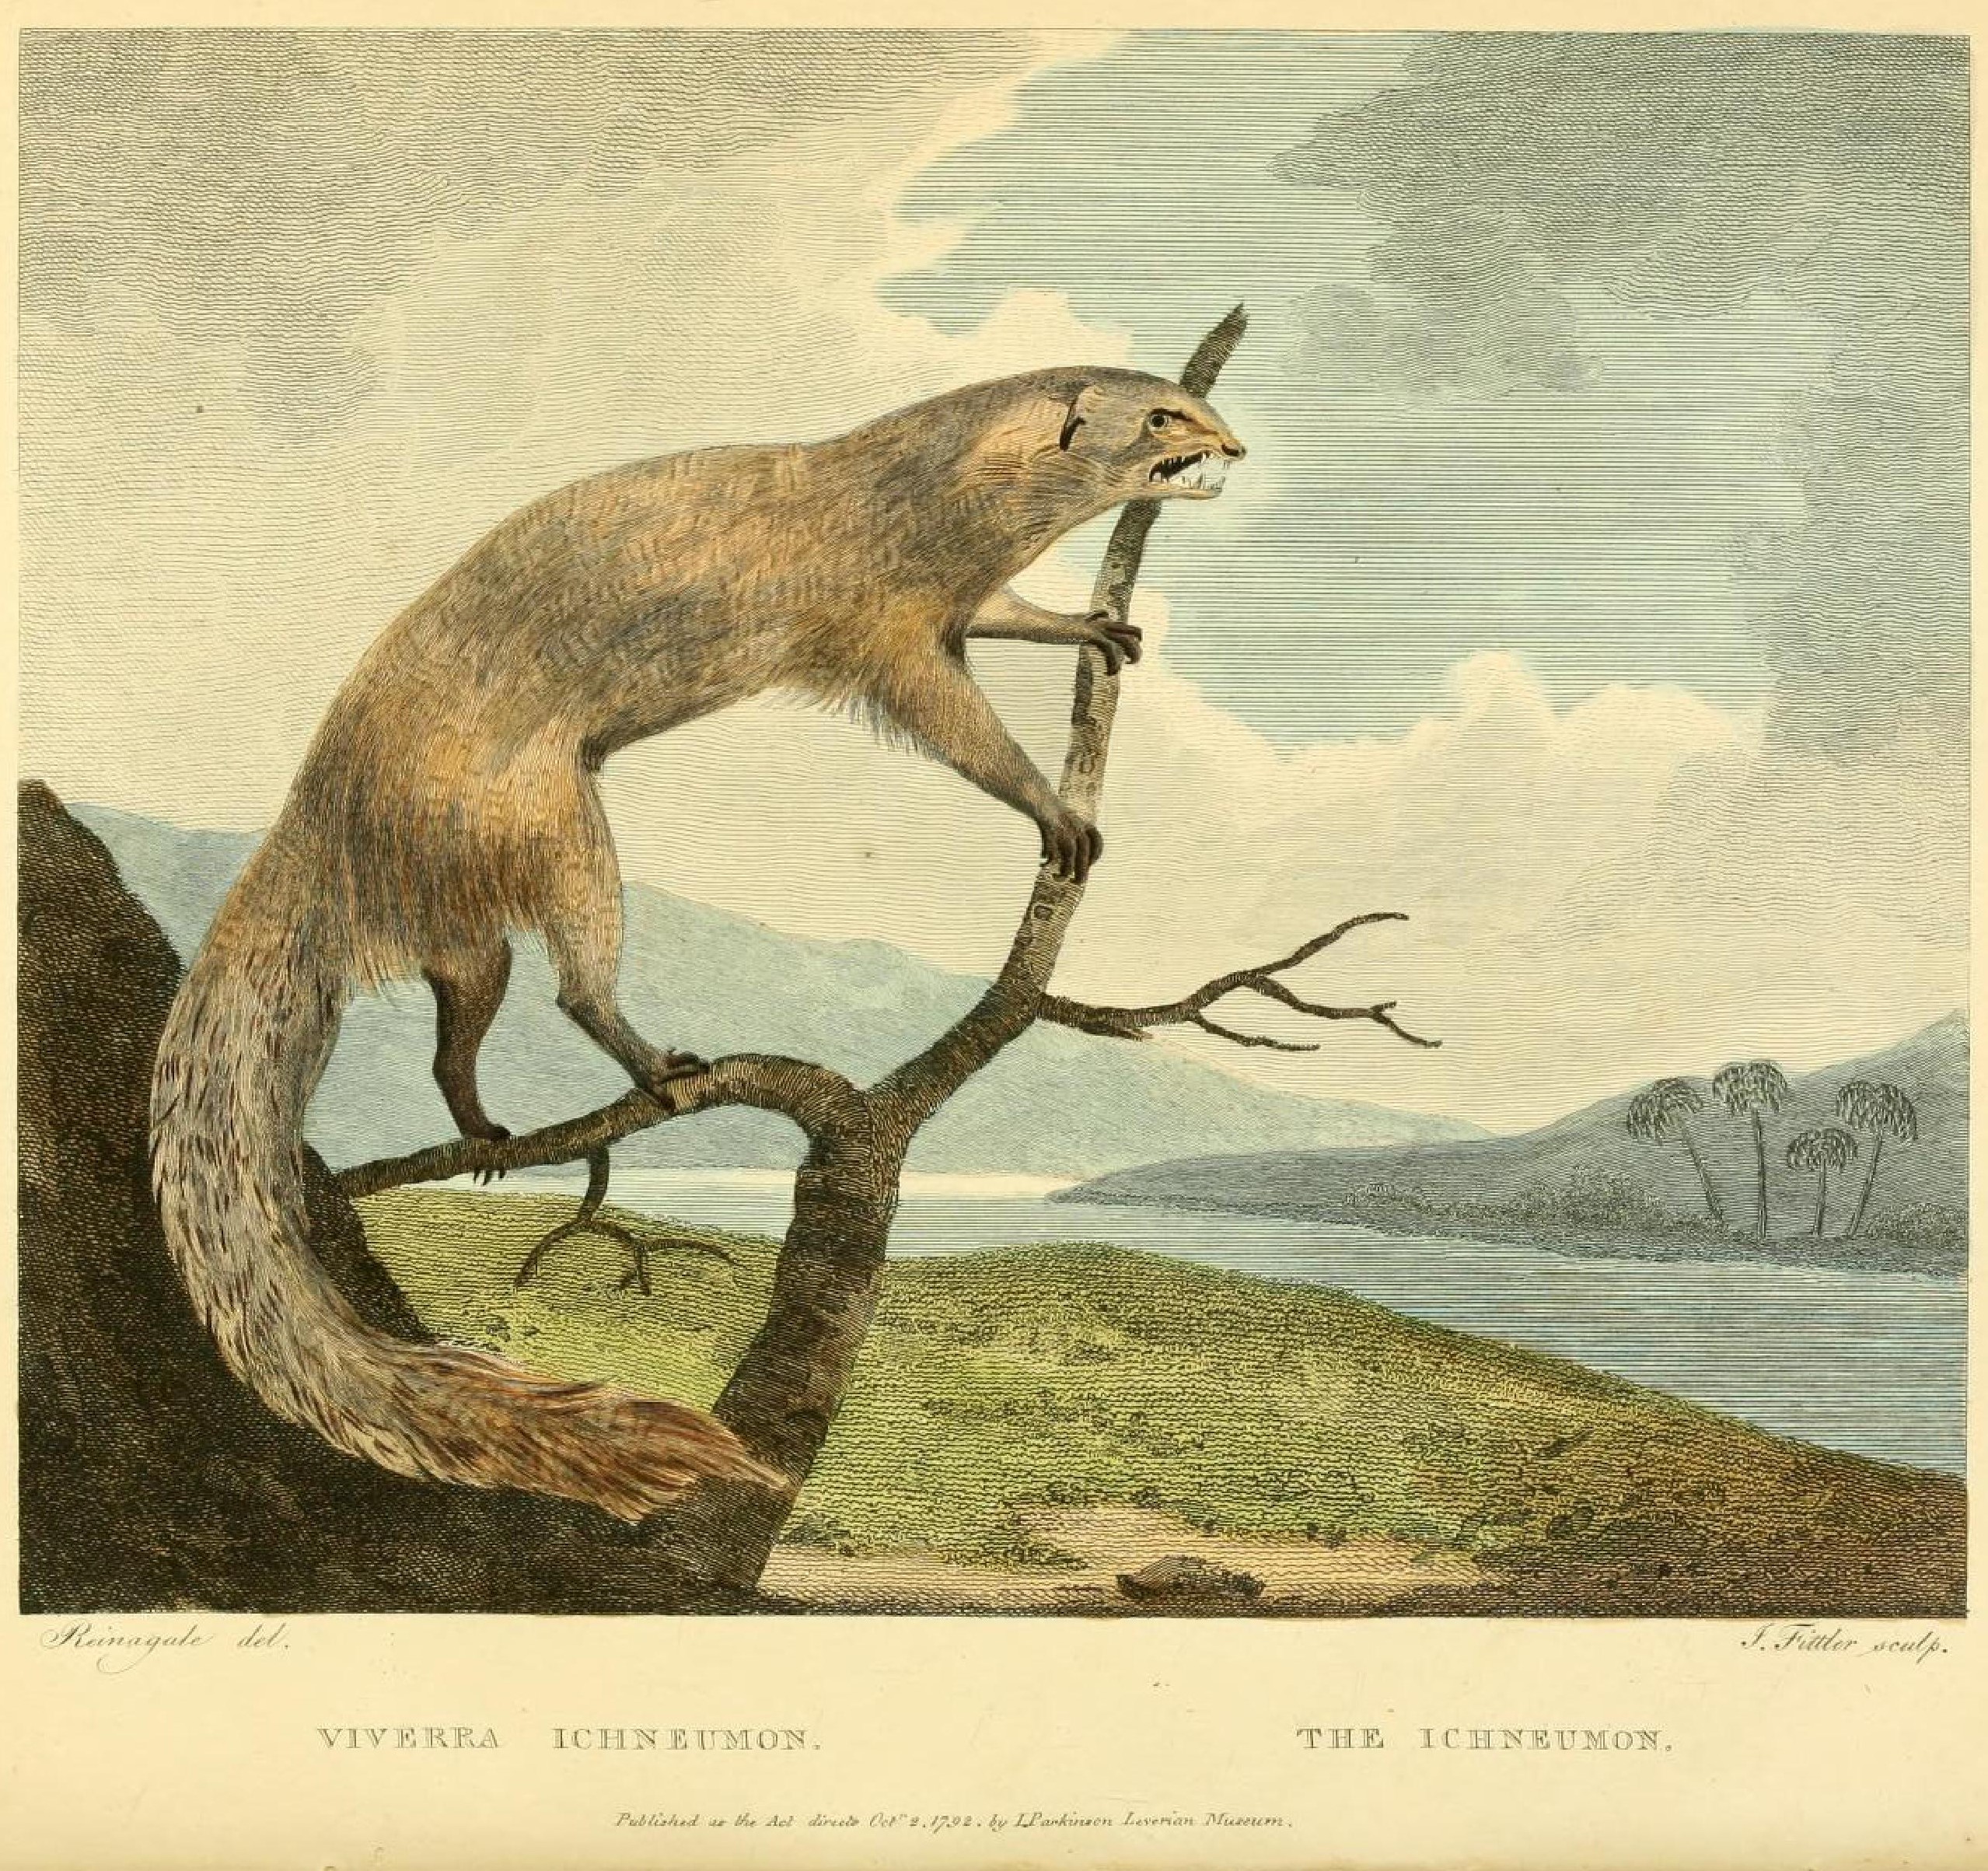 An Egyptian Mongoose (viverea ichneumon) in a tree